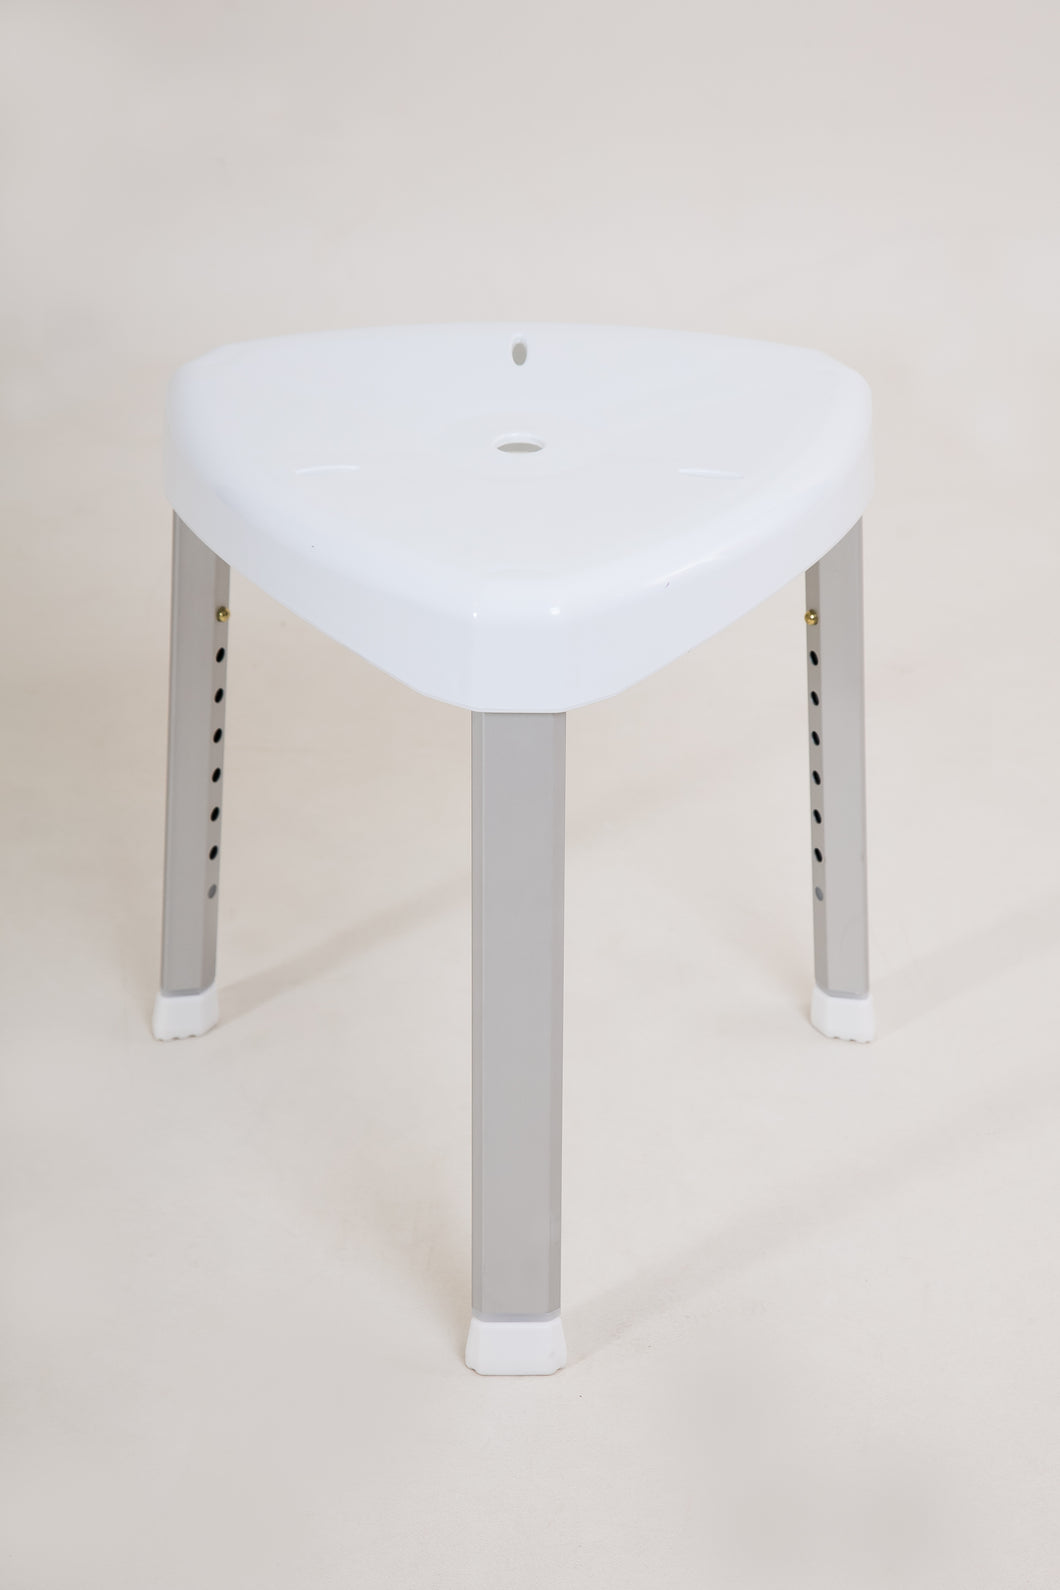 Corner shower stool - Parkinson's shop